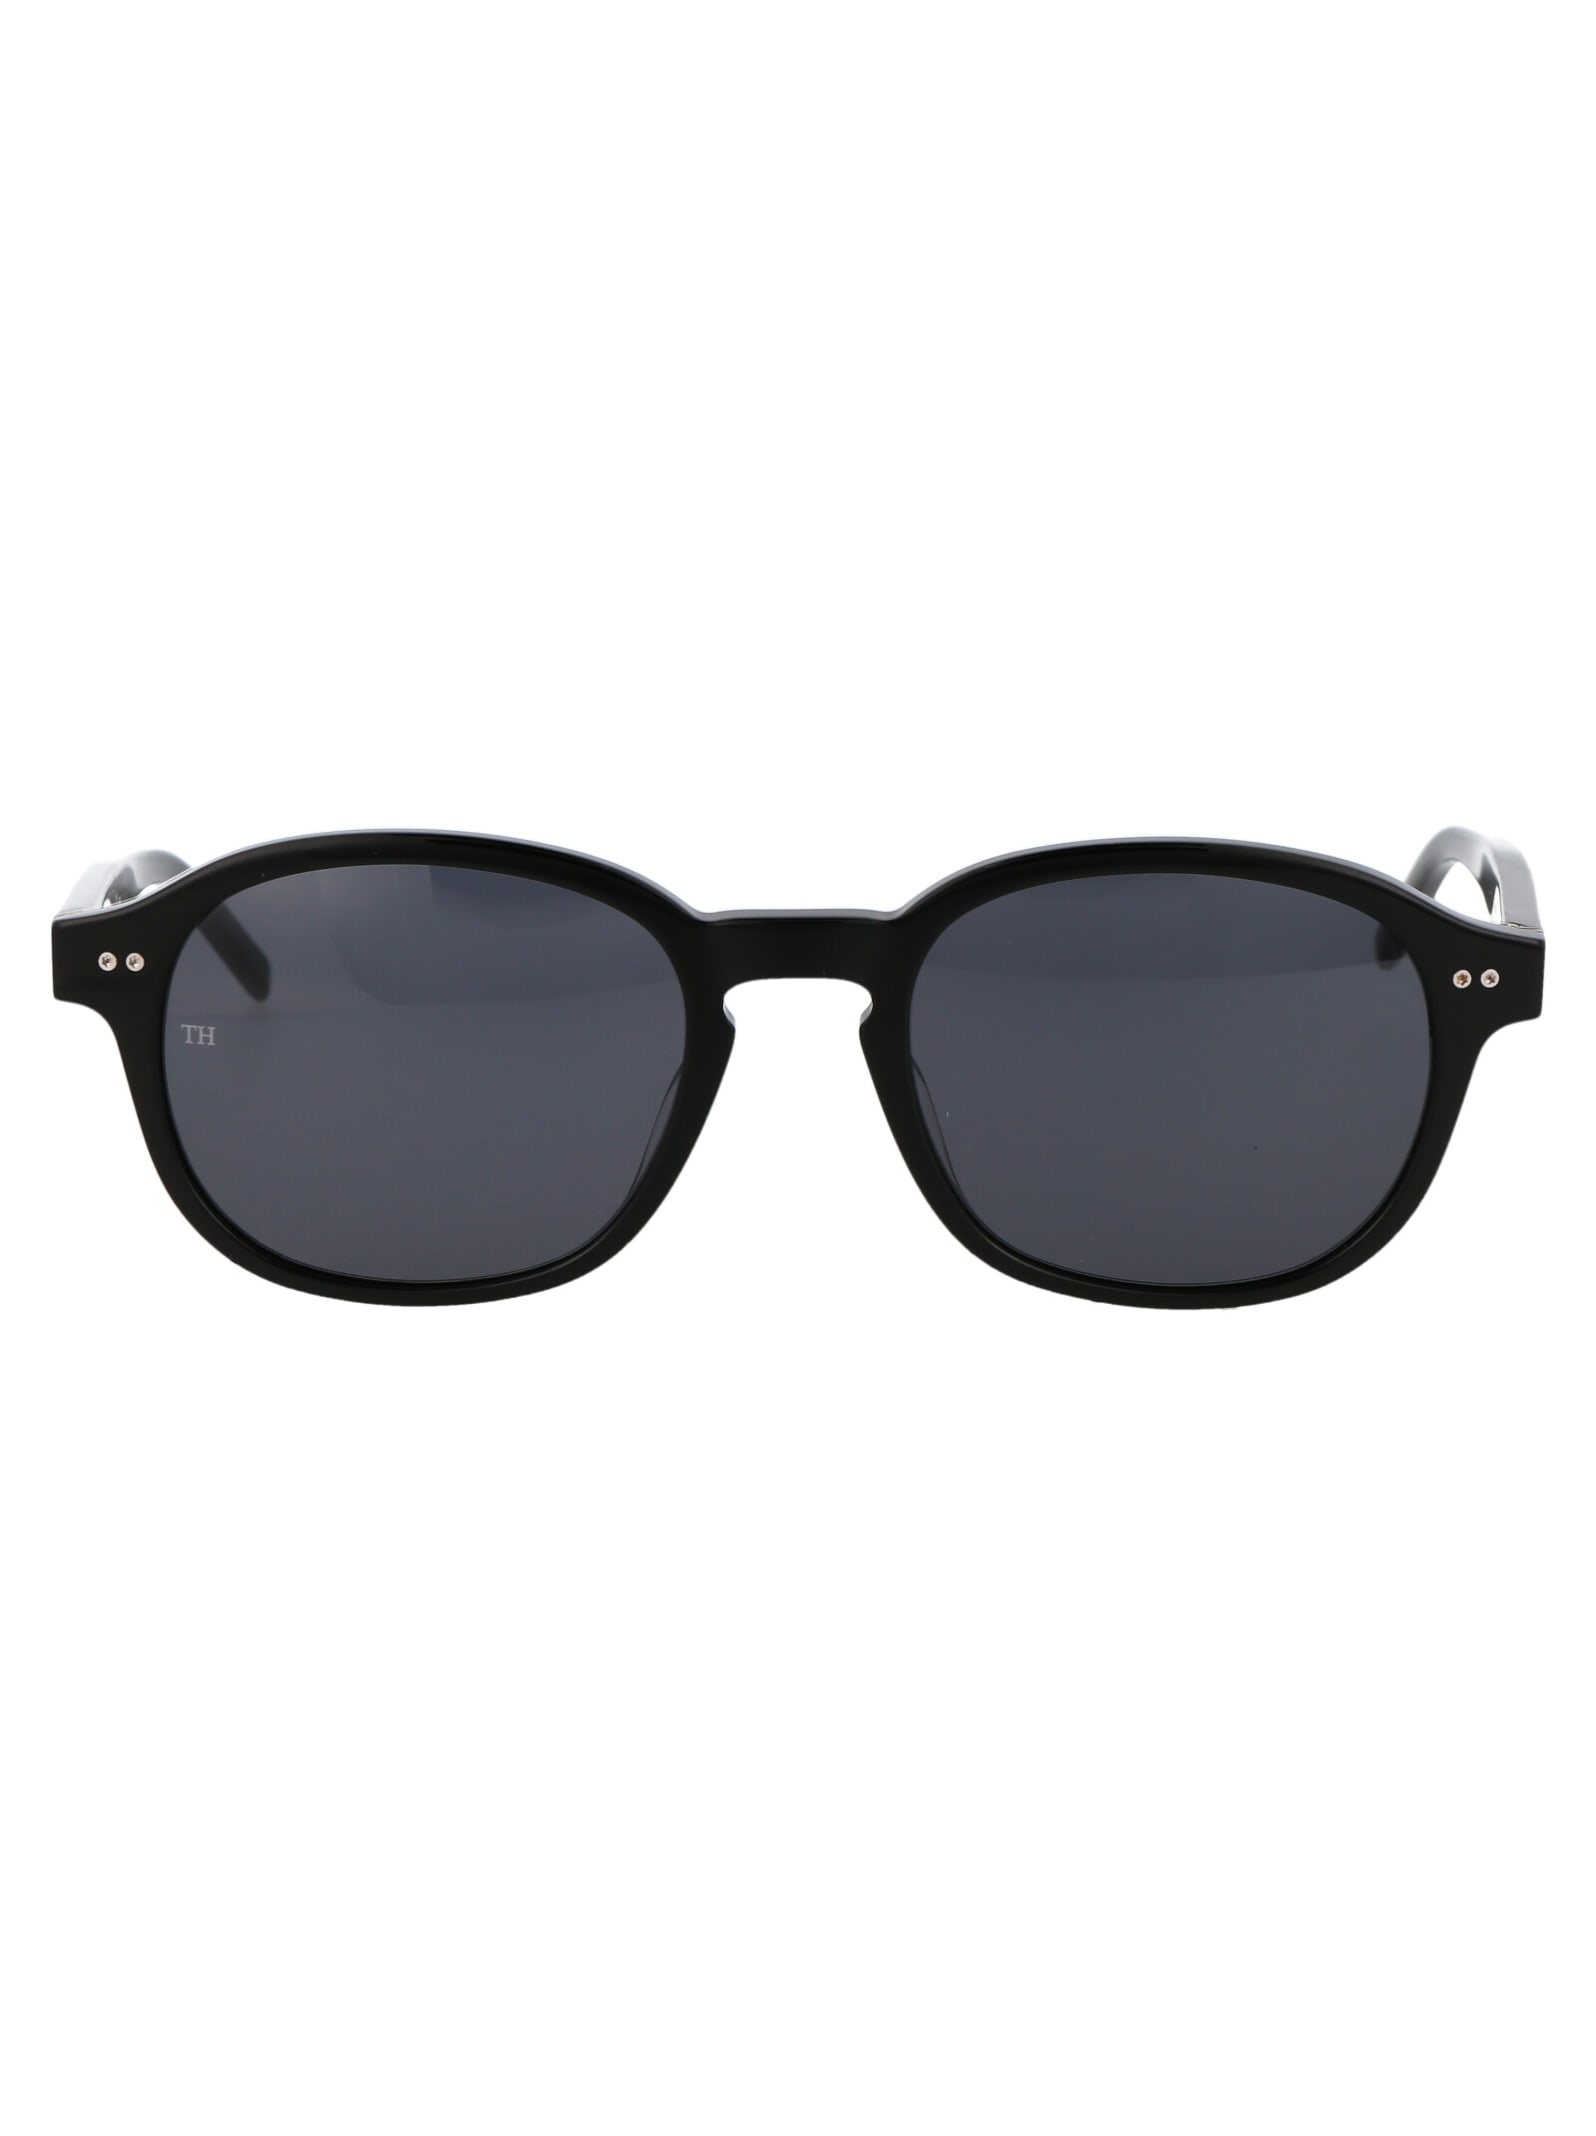 Tommy Hilfiger Th 1850/g/s Sunglasses